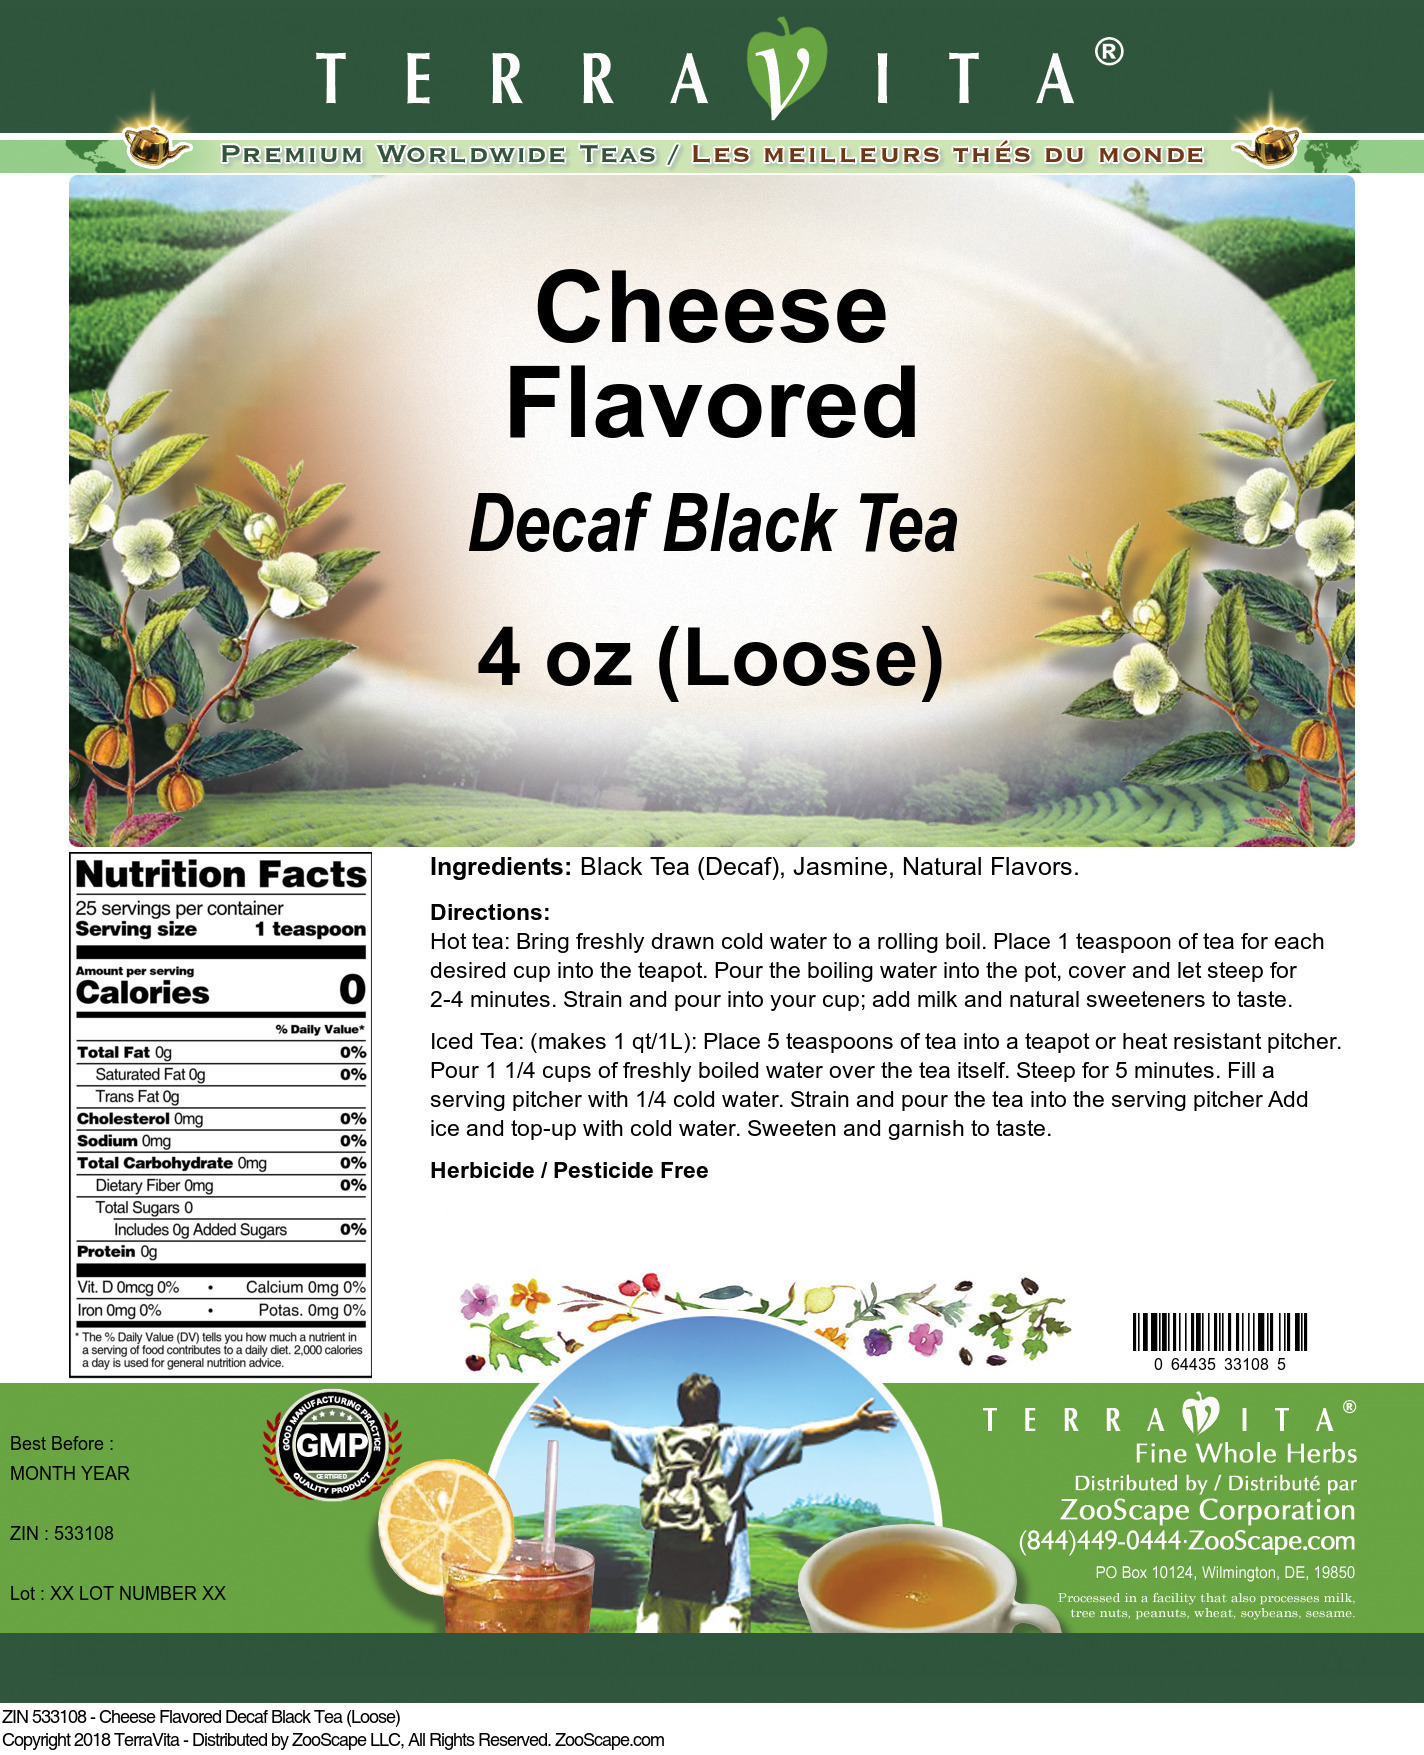 Cheese Flavored Decaf Black Tea (Loose) - Label